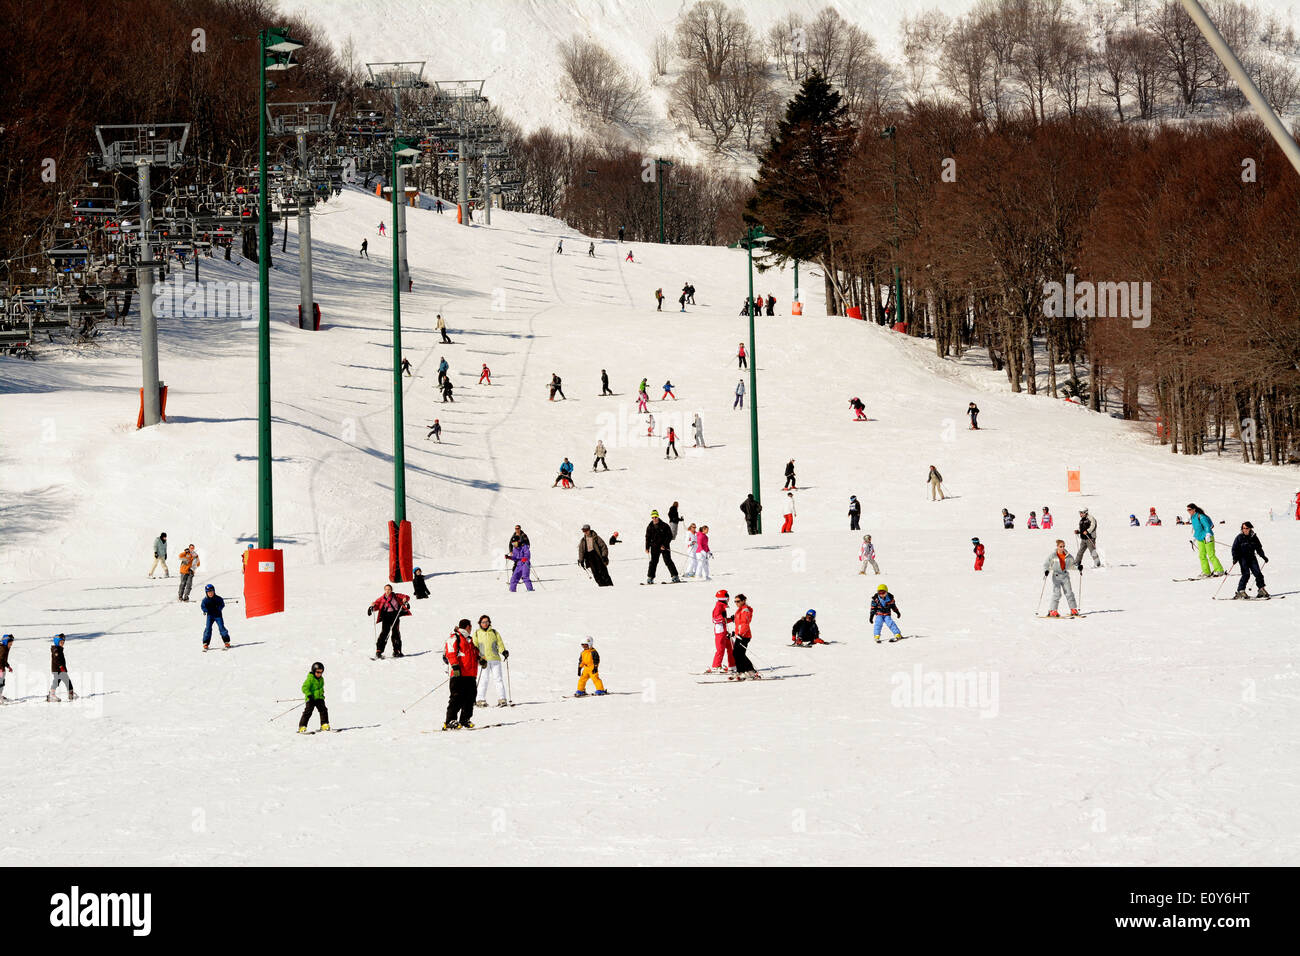 Super Besse ski resort, Auvergne, France - people skiing down the piste Stock Photo